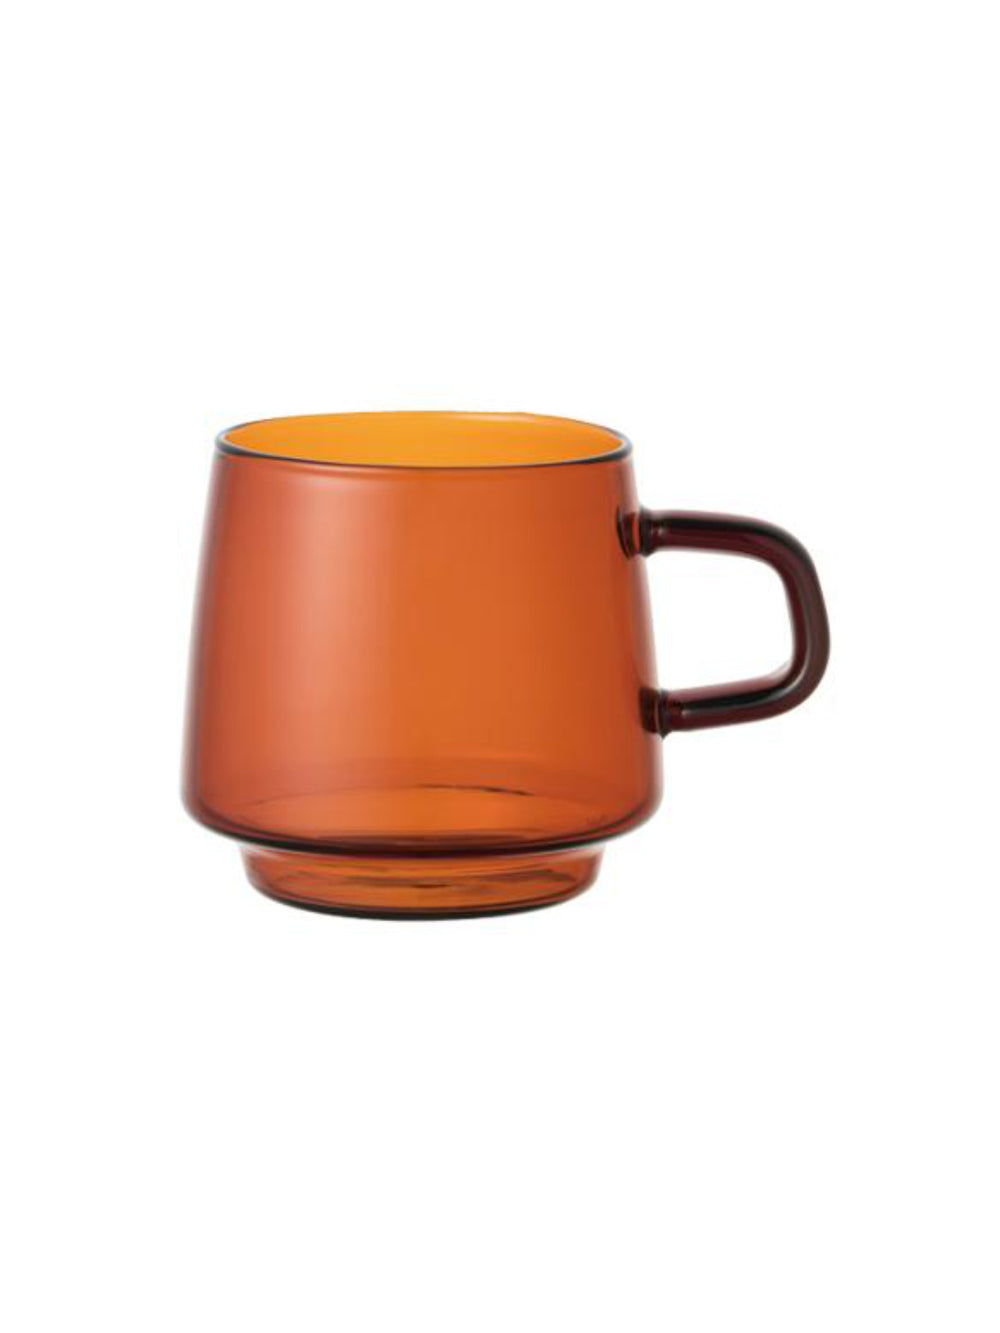 KINTO Sepia Mug (340ml/11.5oz) (4-Pack)